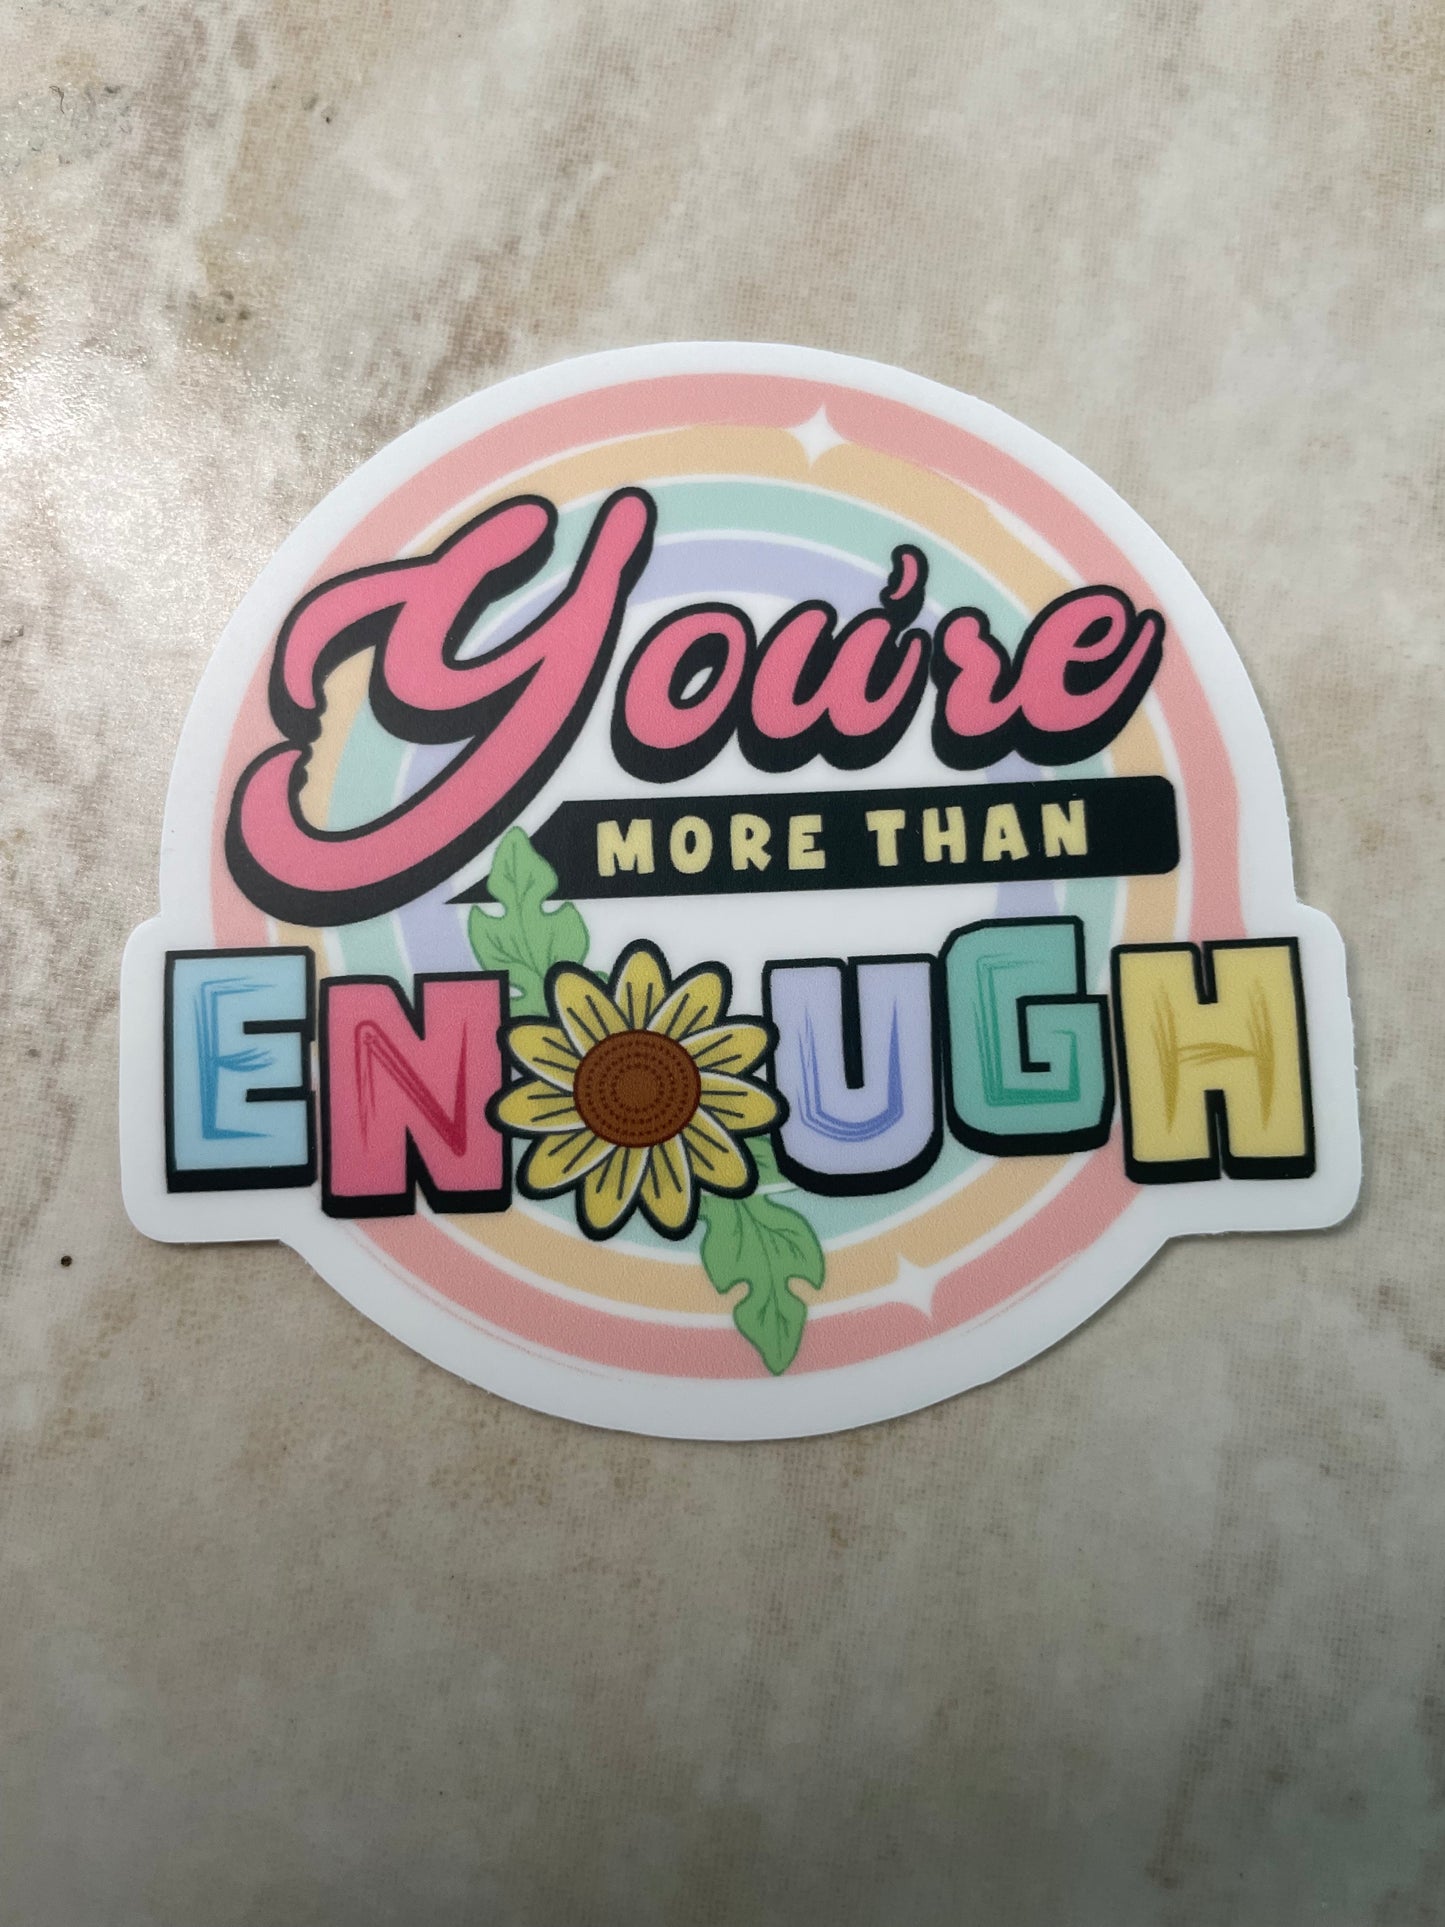 You're More Than Enough Body Positivity Sticker